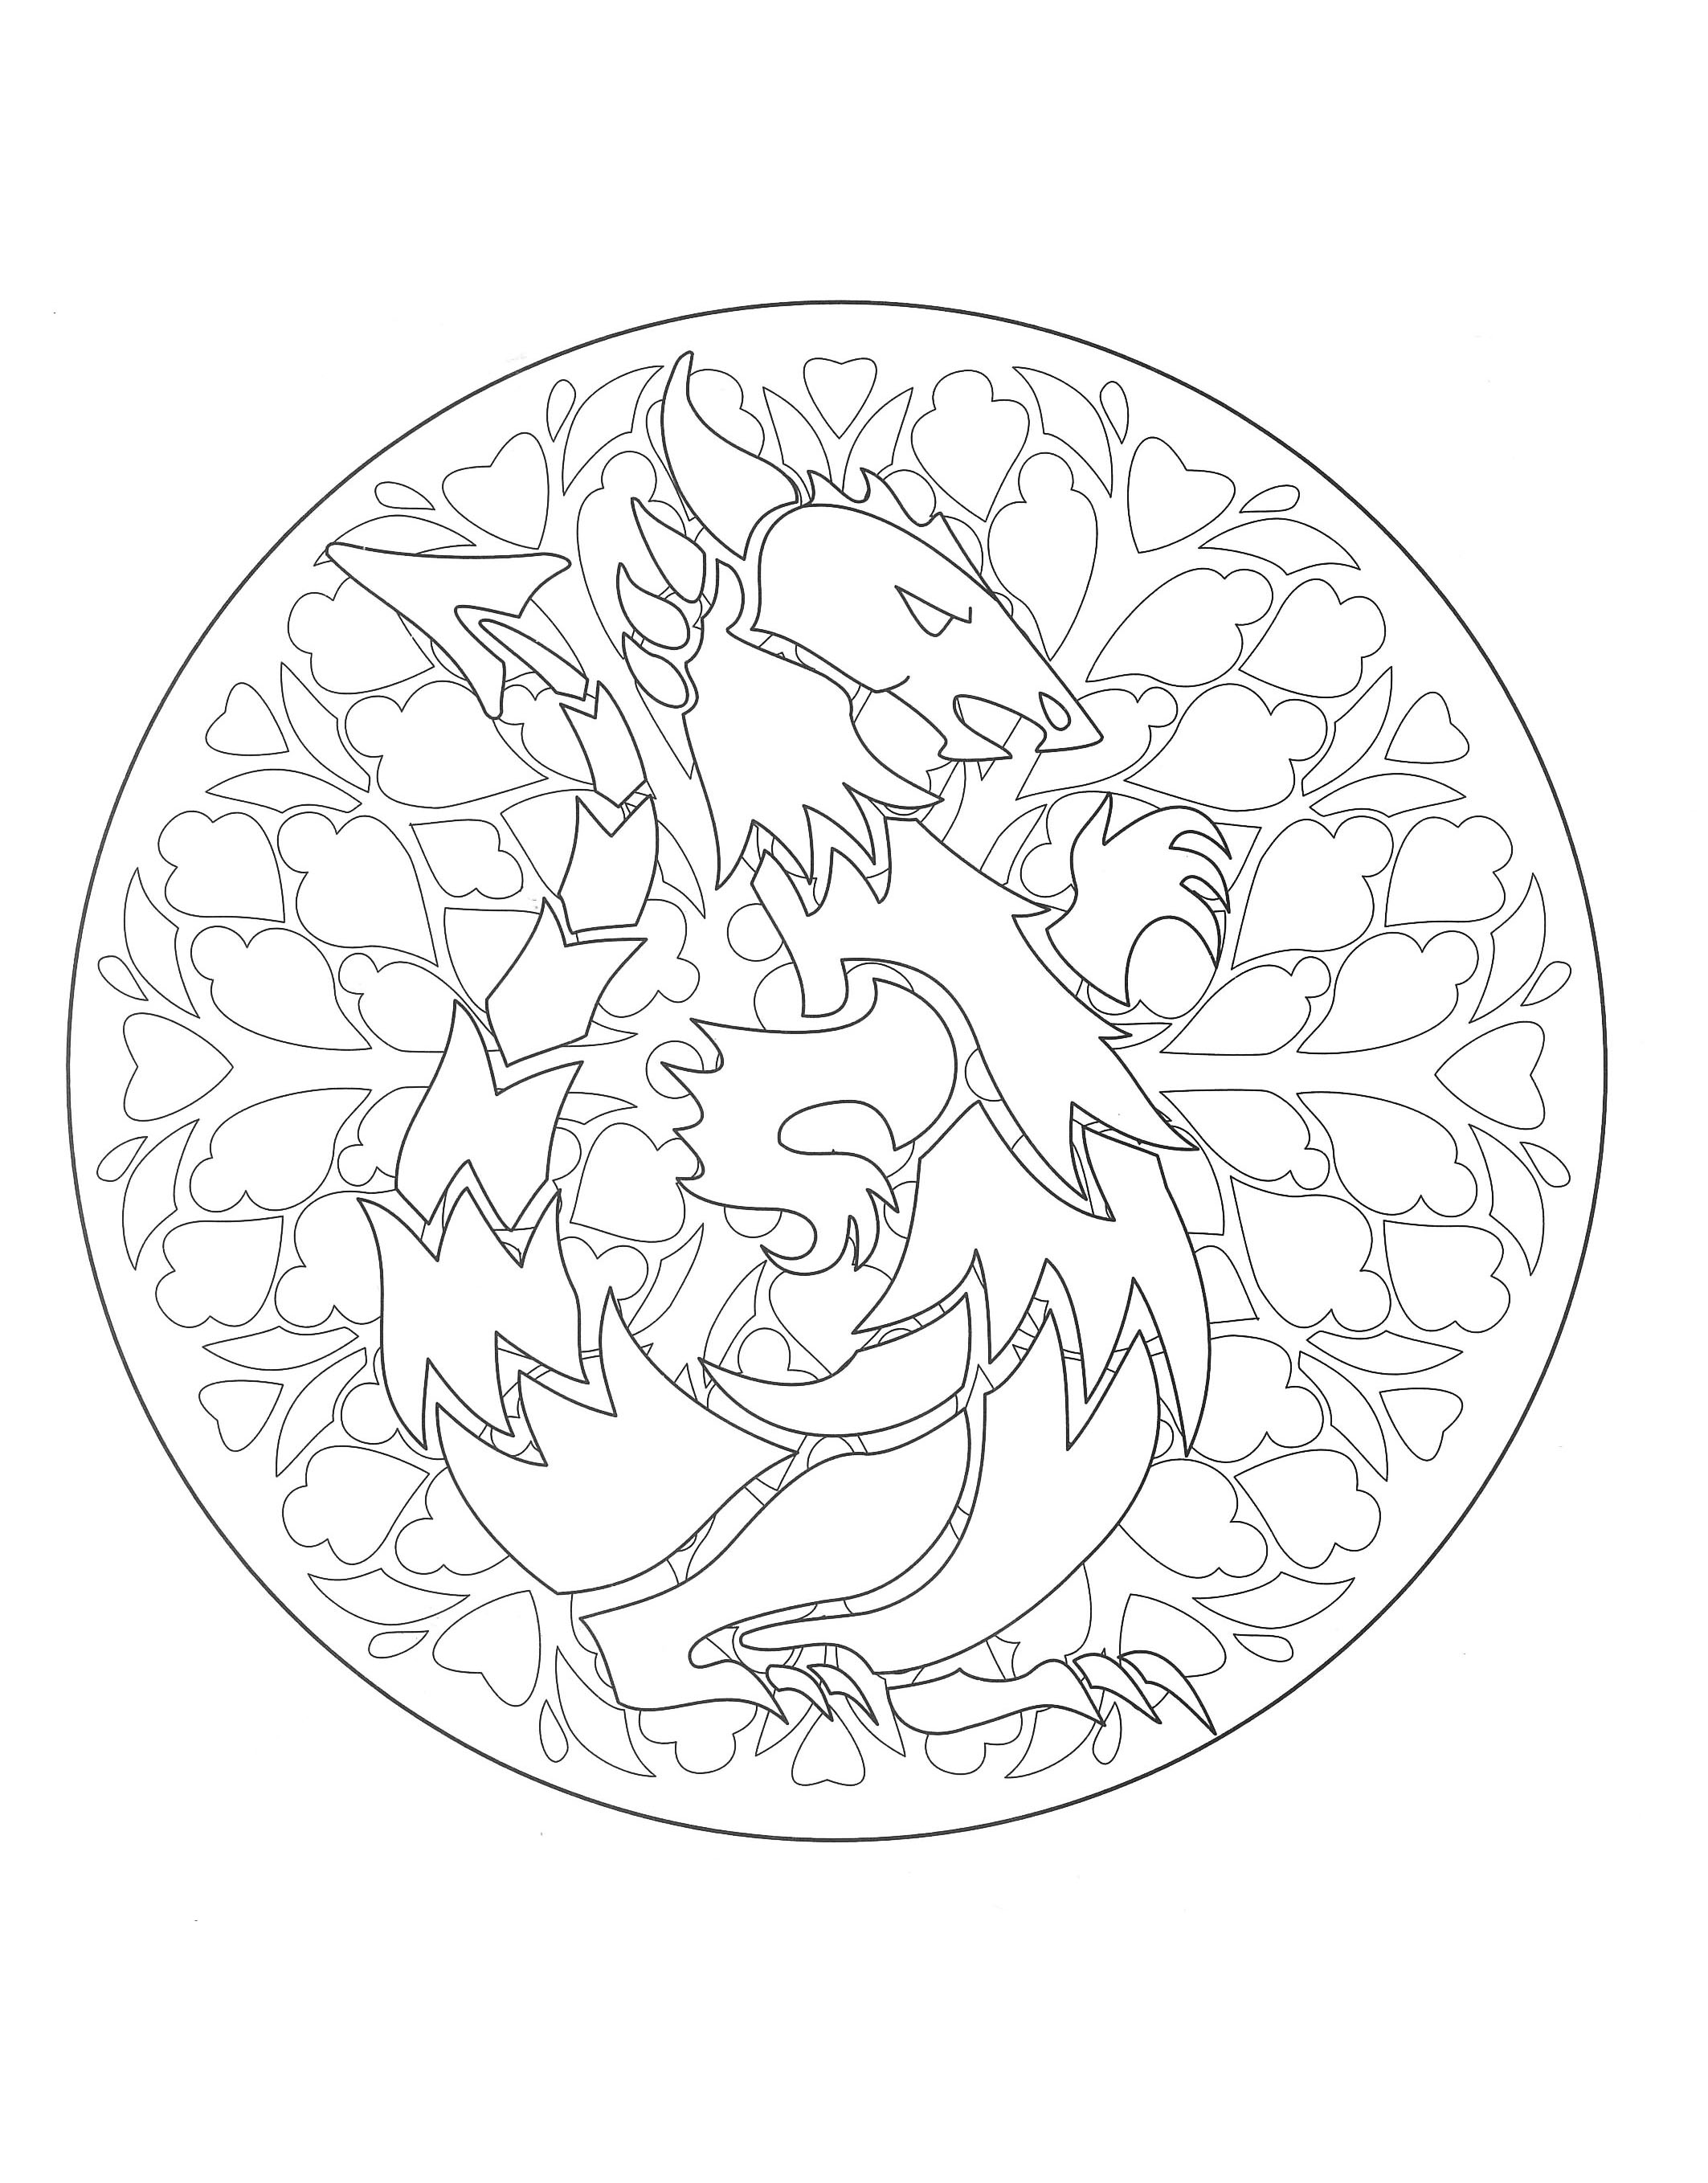 Mandala dragon - 1 - Mandalas Adult Coloring Pages